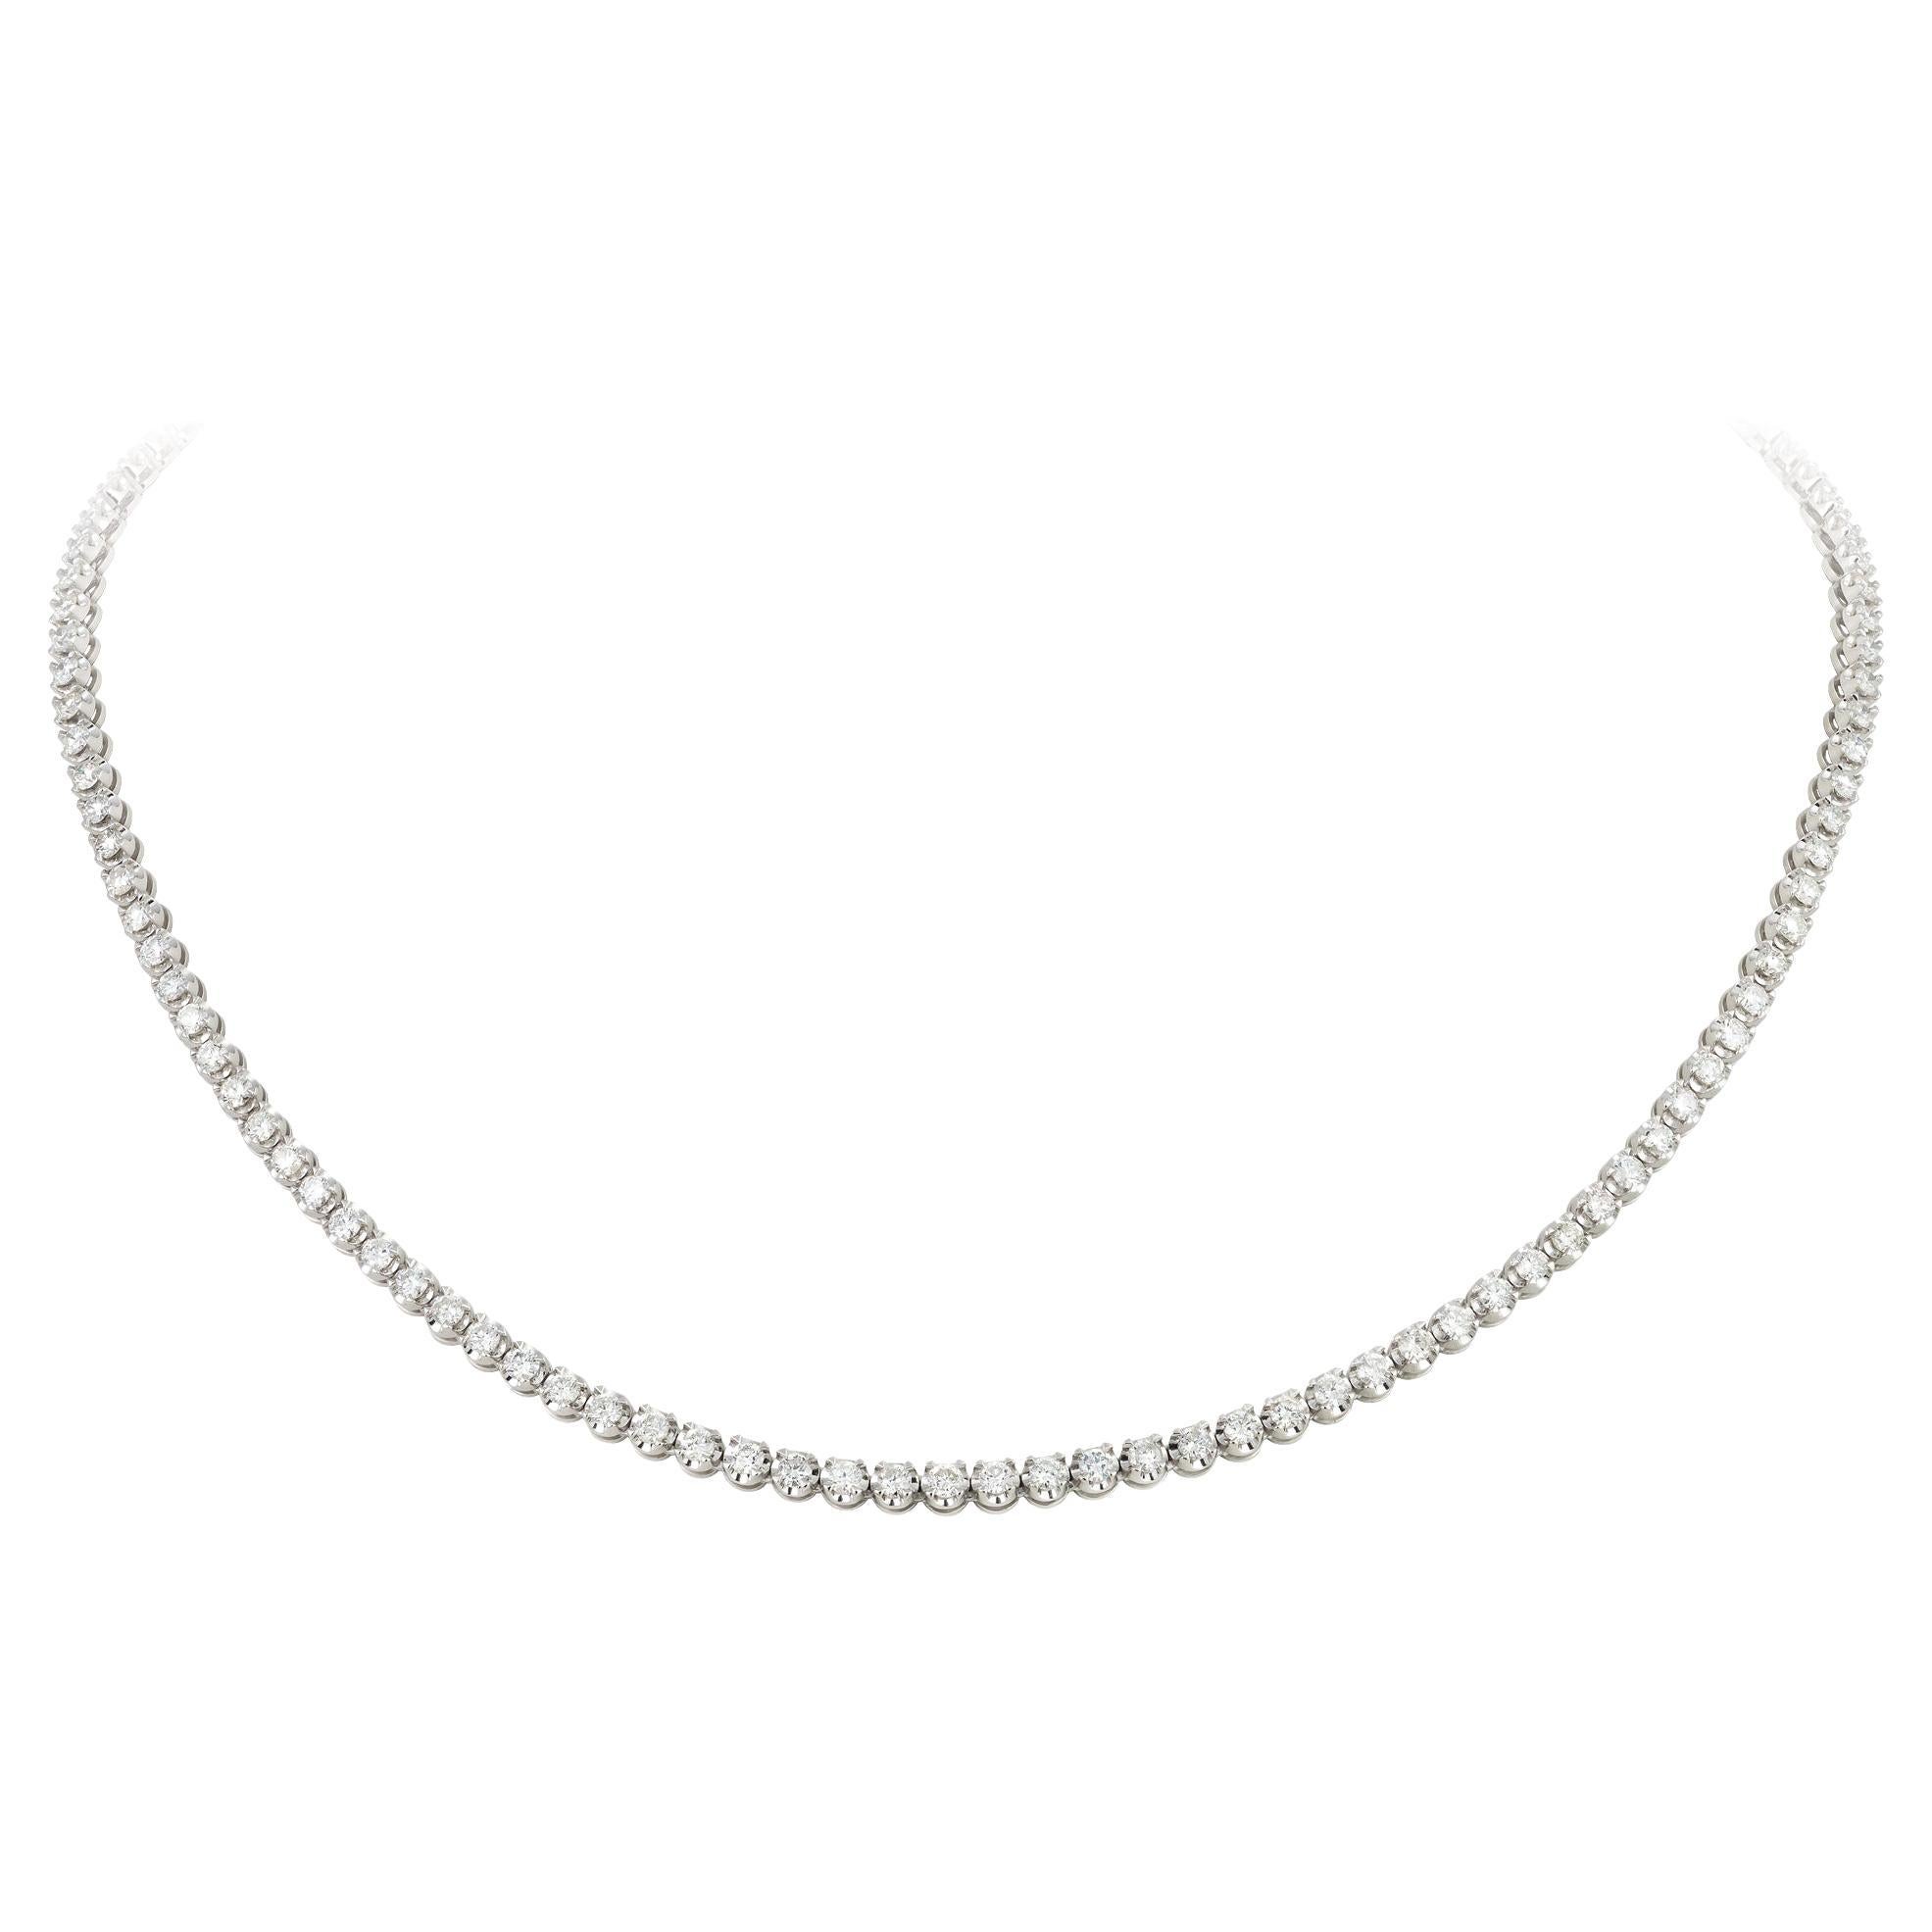 Unique White Gold 18K Necklace Diamond for Her